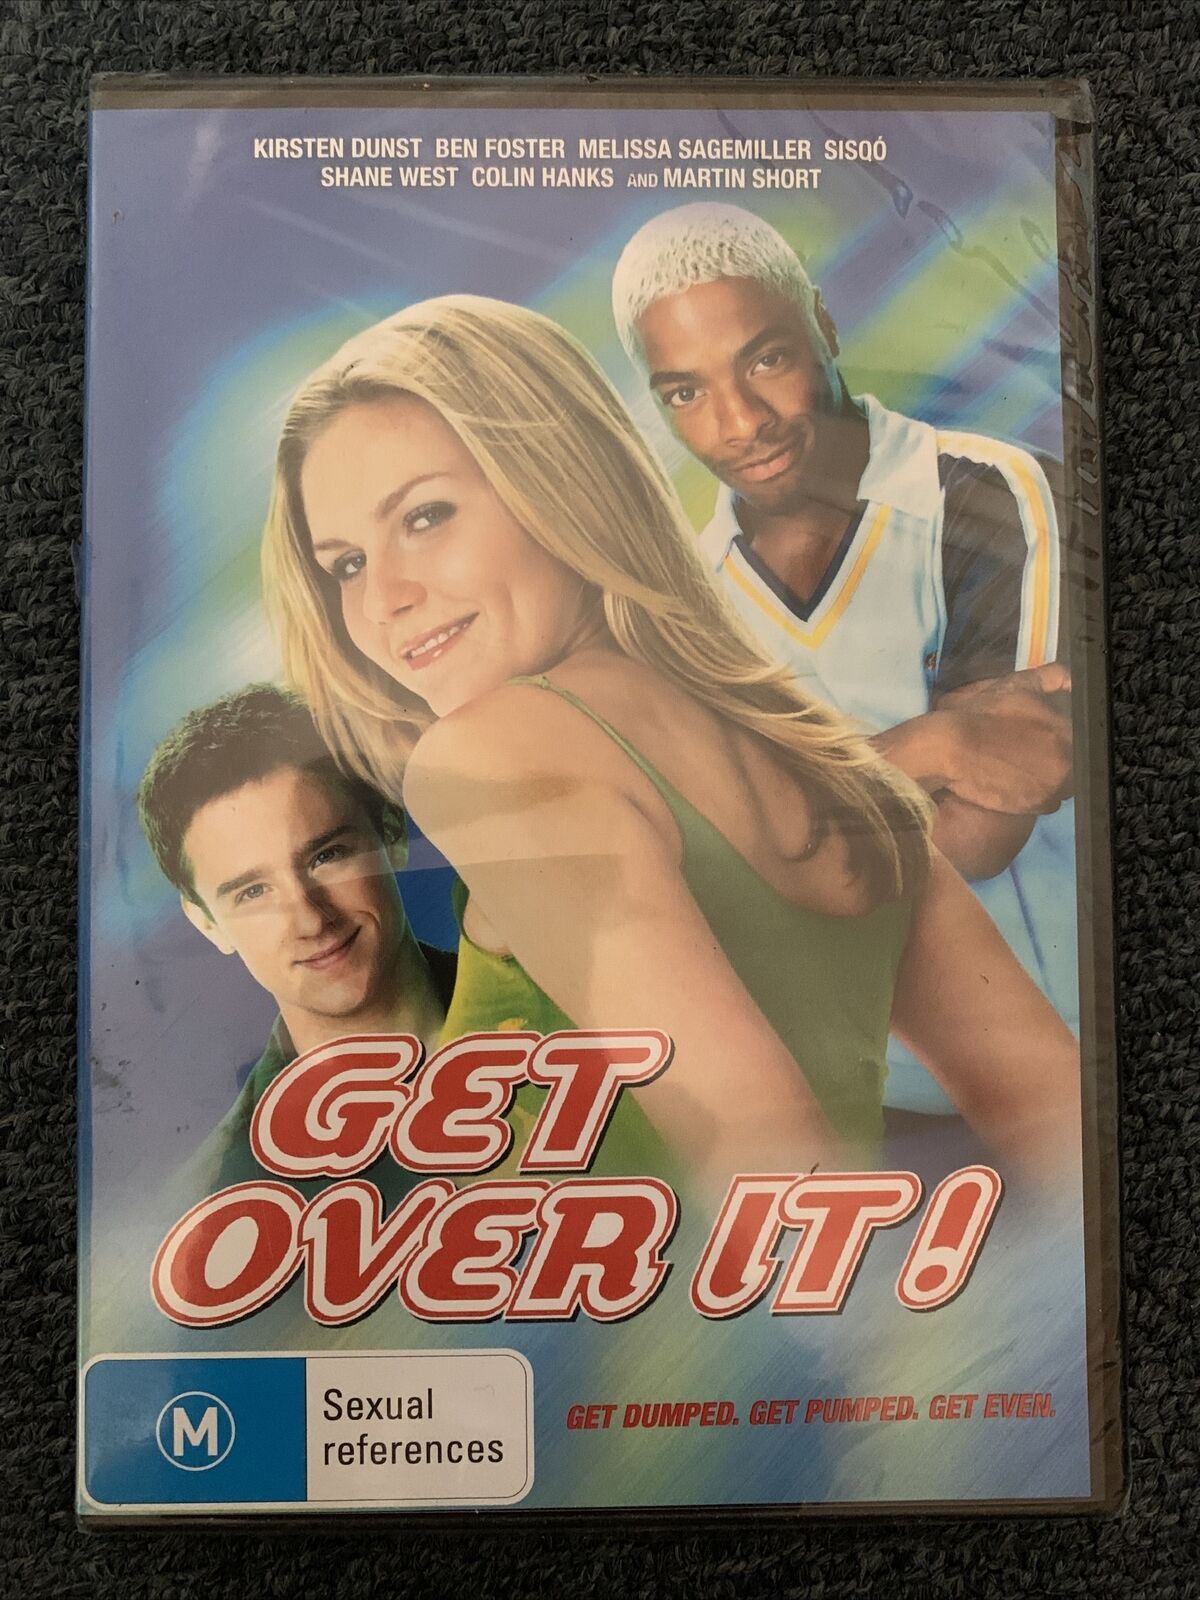 *New Sealed* Get Over It! (DVD, 2001) Kirsten Dunst, Ben Foster - Region 4